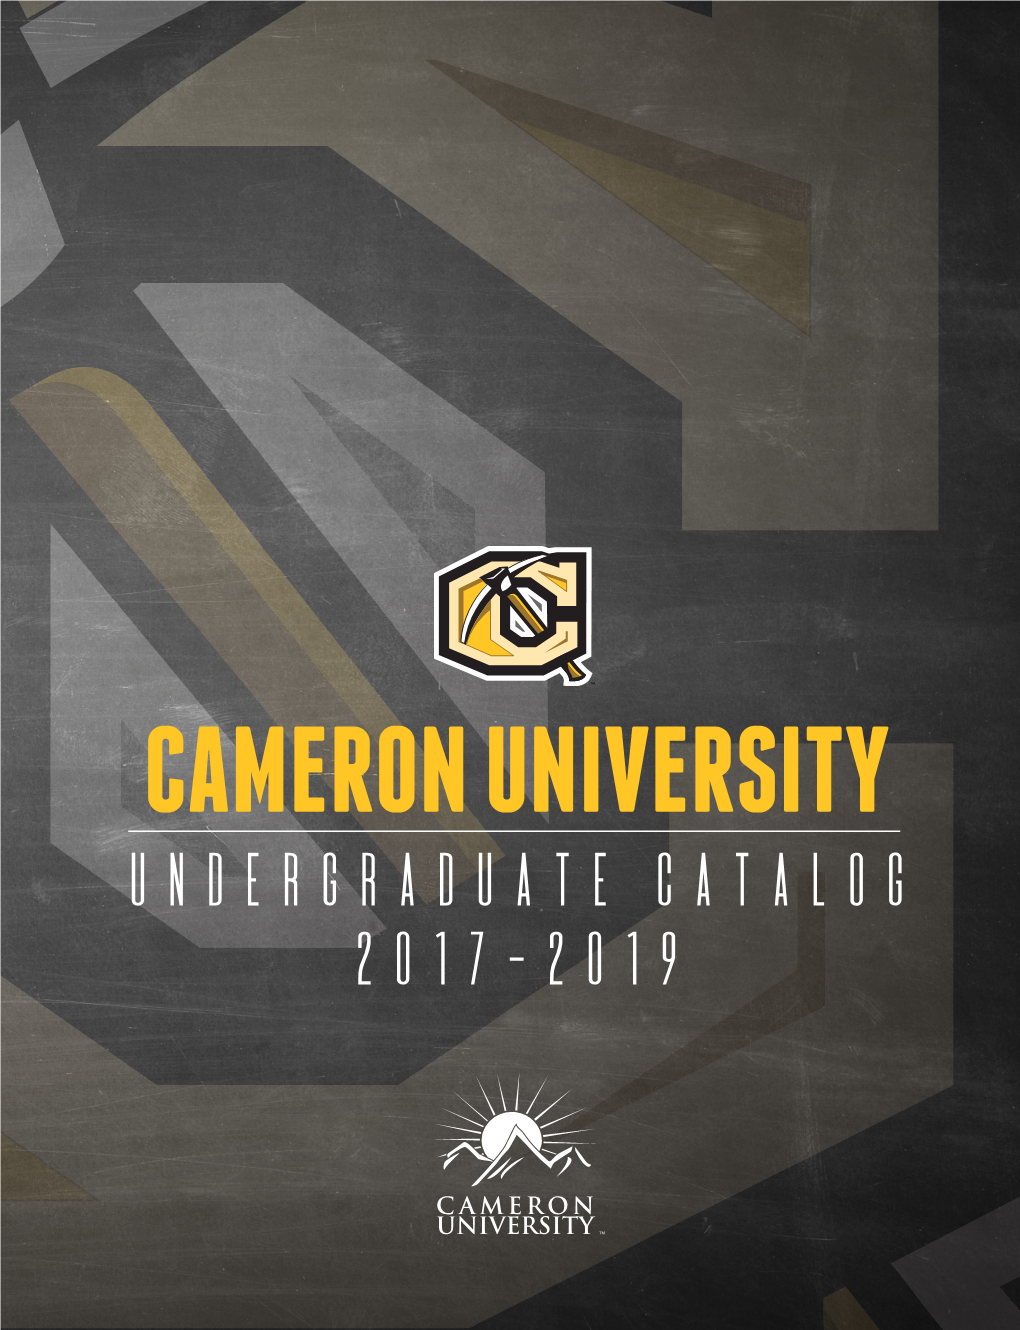 Cameron University Undergraduate Catalog 2017-2019